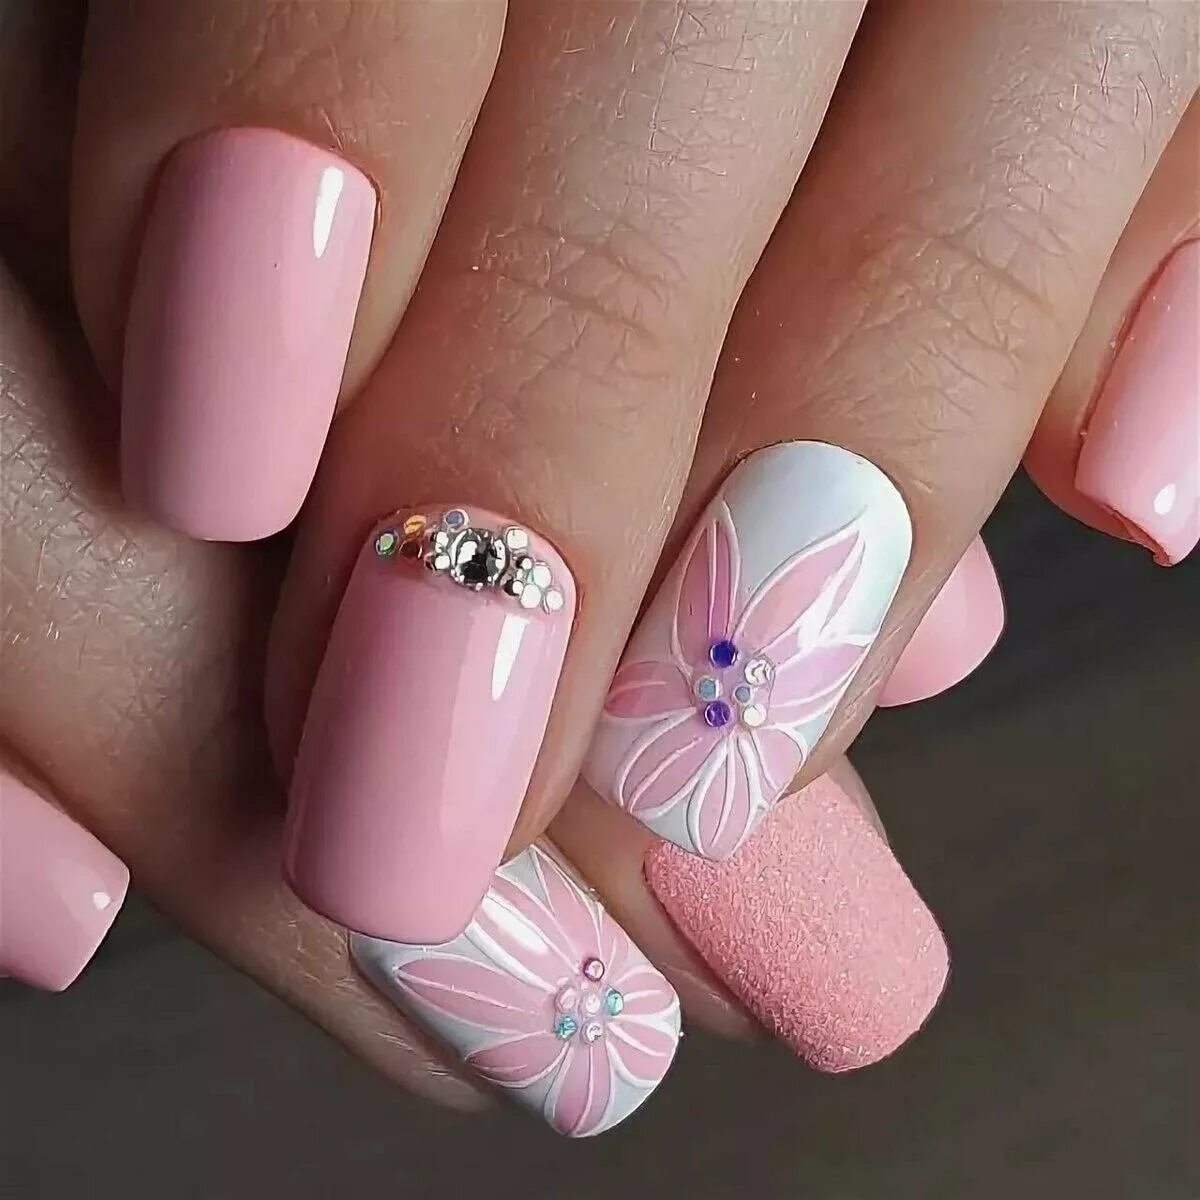 Красивые ногти на весну фото. Розовый маникюр. Р̸о̸з̸о̸в̸ы̸й̸ м̸а̸н̸и̸к̸. Красивые ногти. Красивые ногти на лето.